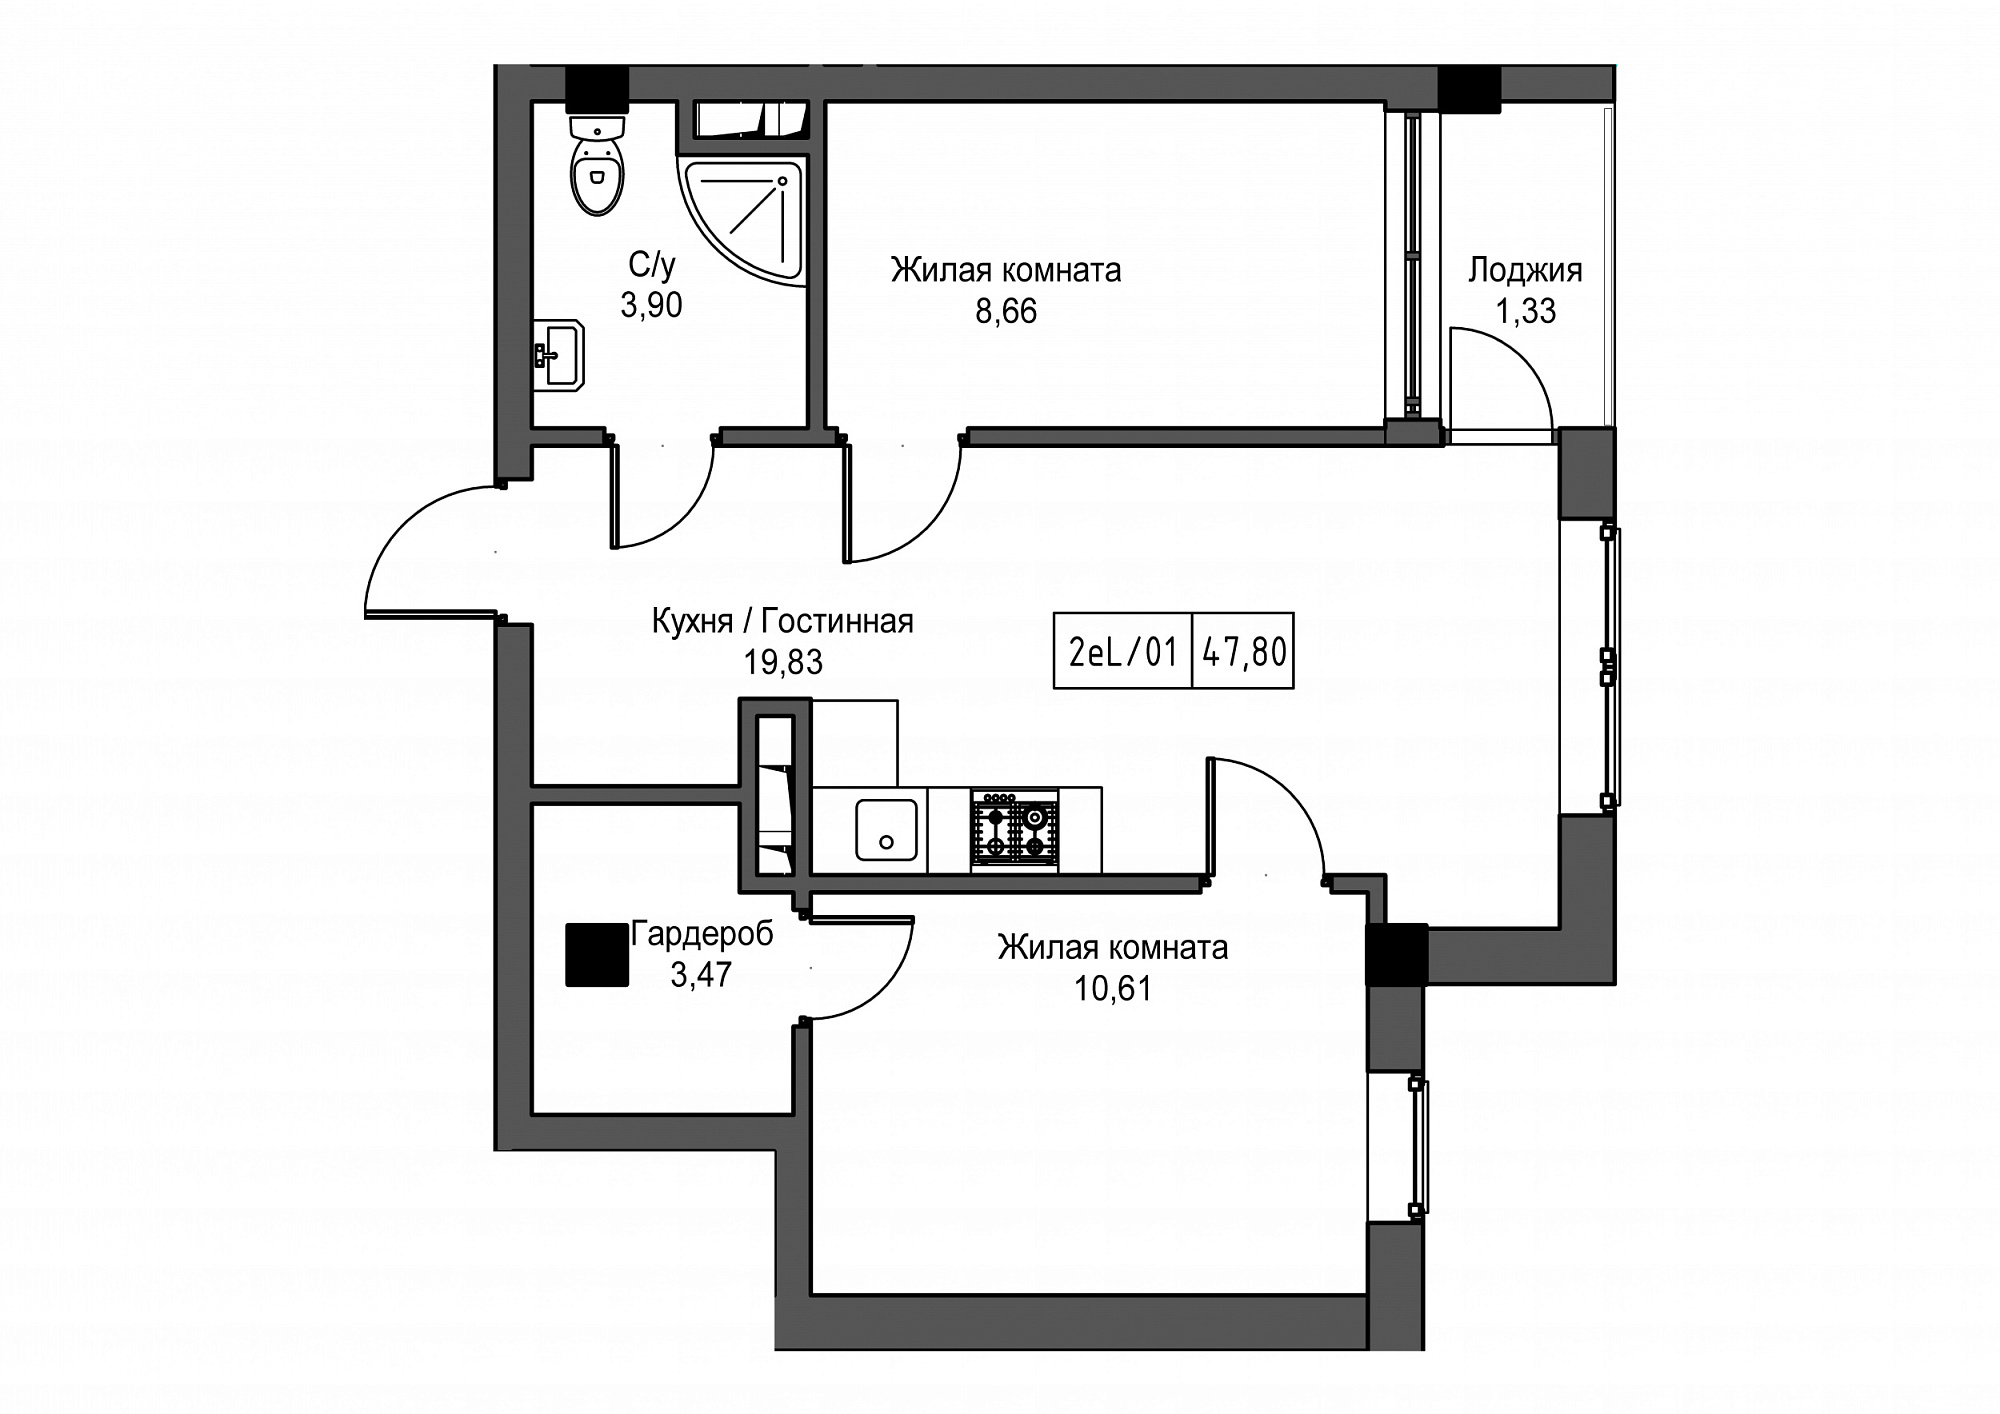 Планування 2-к квартира площею 47.8м2, UM-002-02/0091.